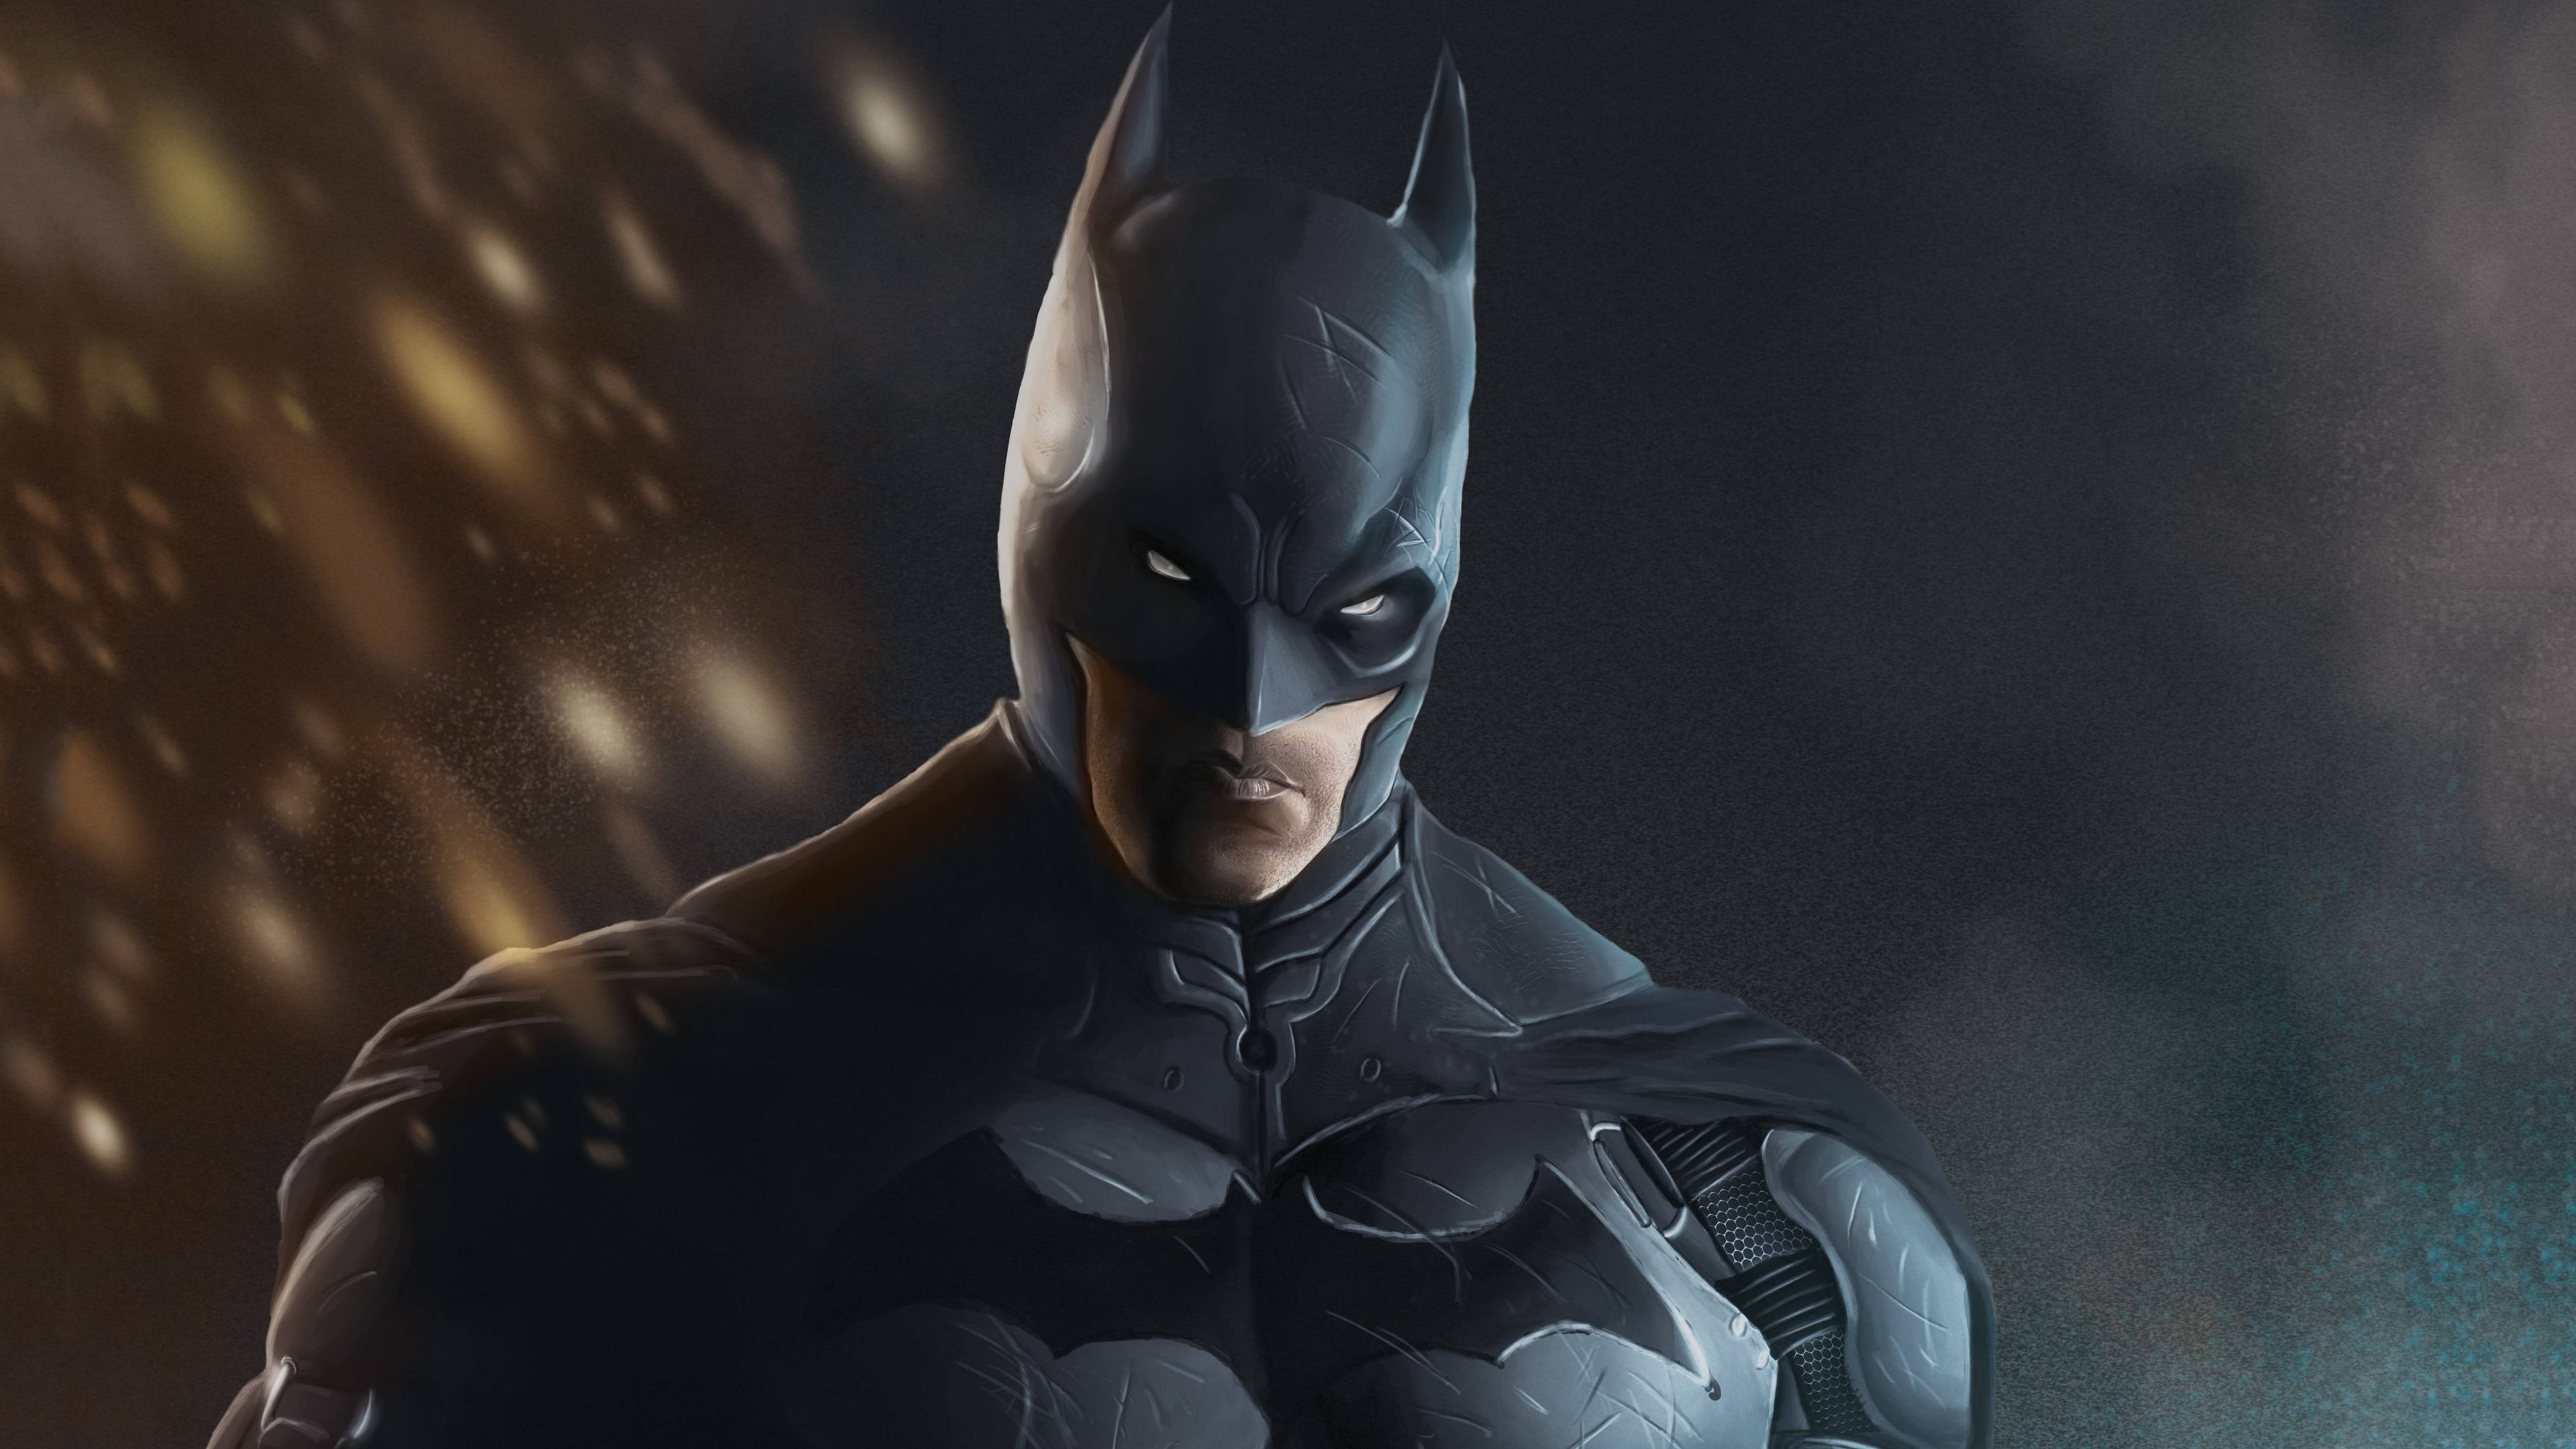 Download Batman In Bat-suit Arkham City 4k Wallpaper 